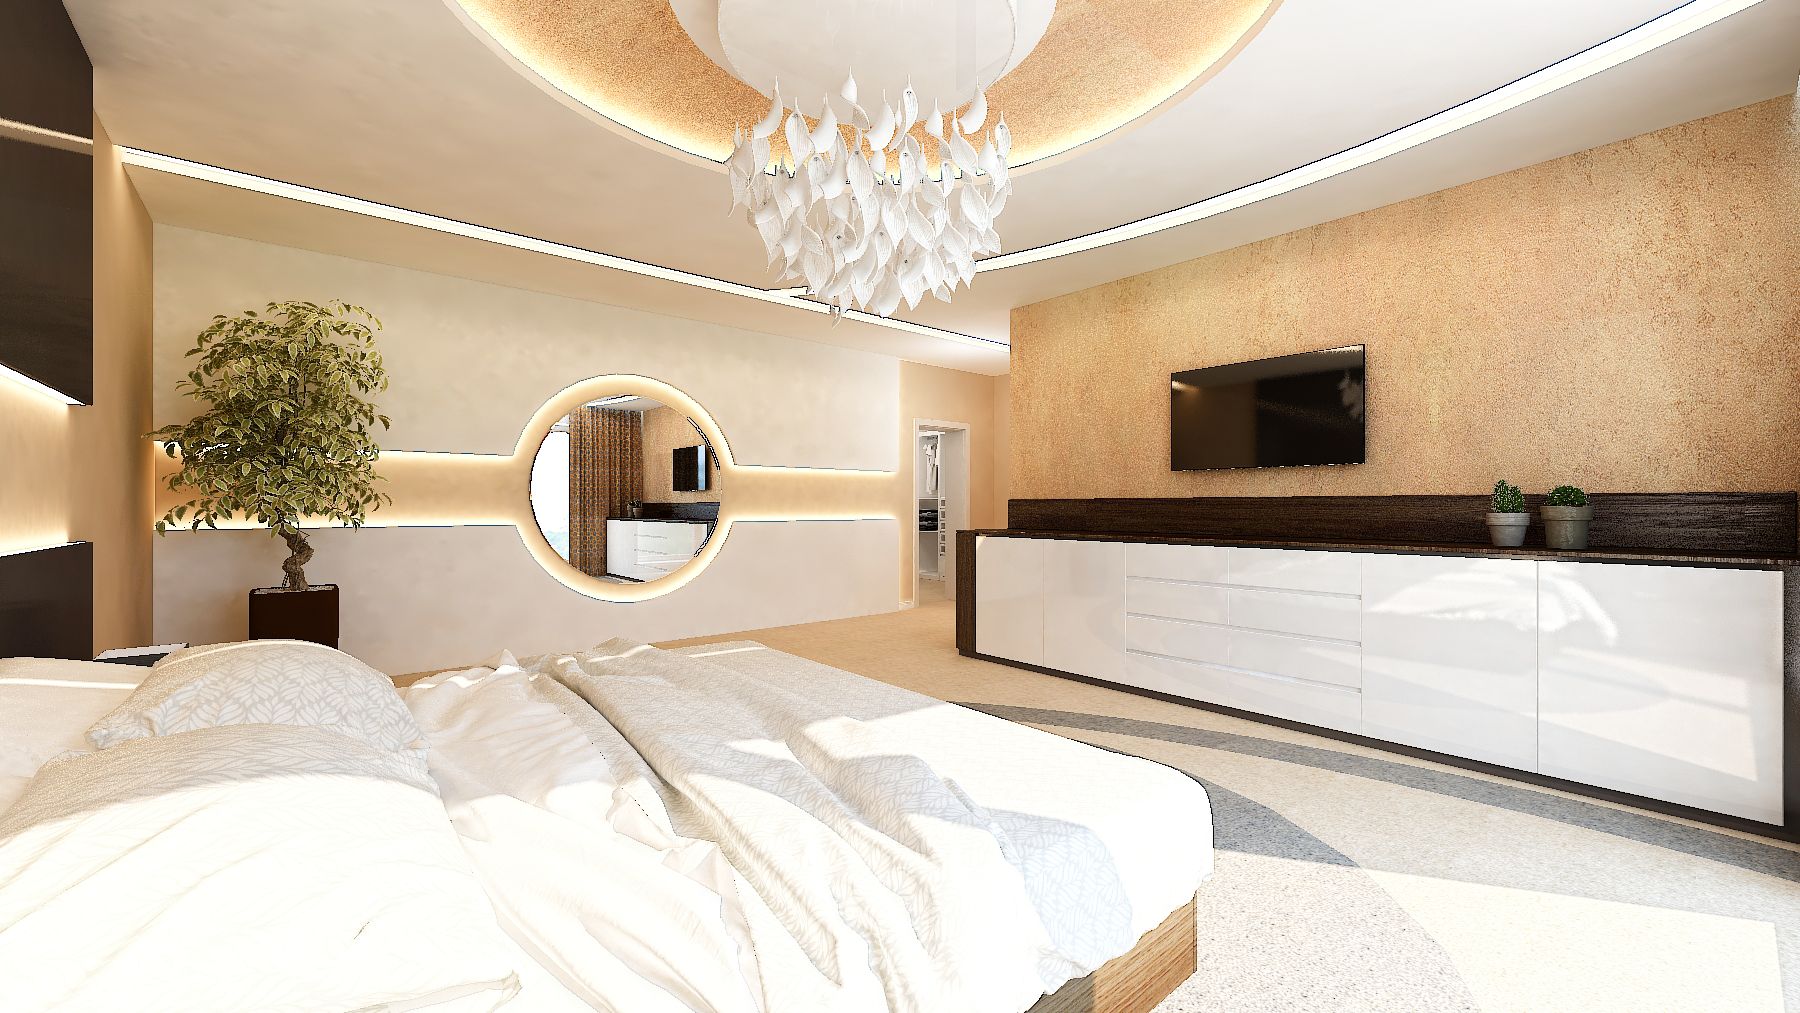 Luxusná spálňa - dizajnové podhľady